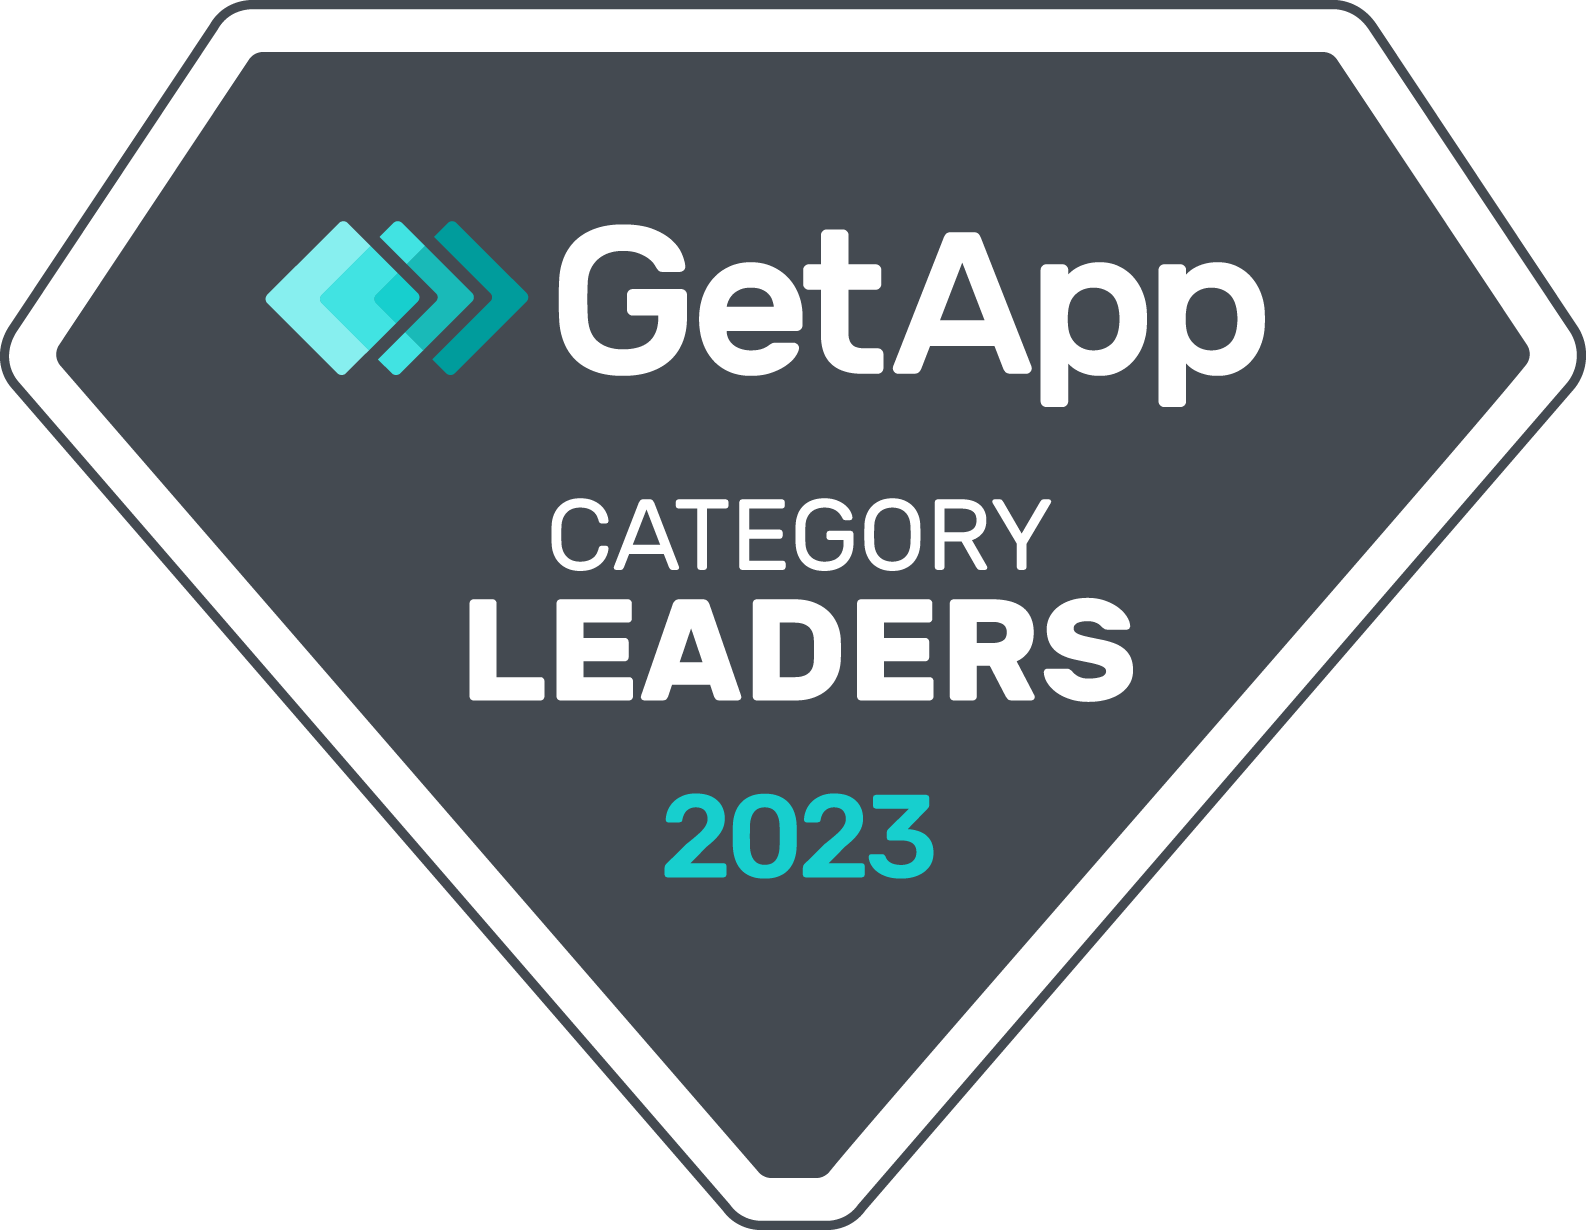 GetApp Job Board Software Category Leader 2023